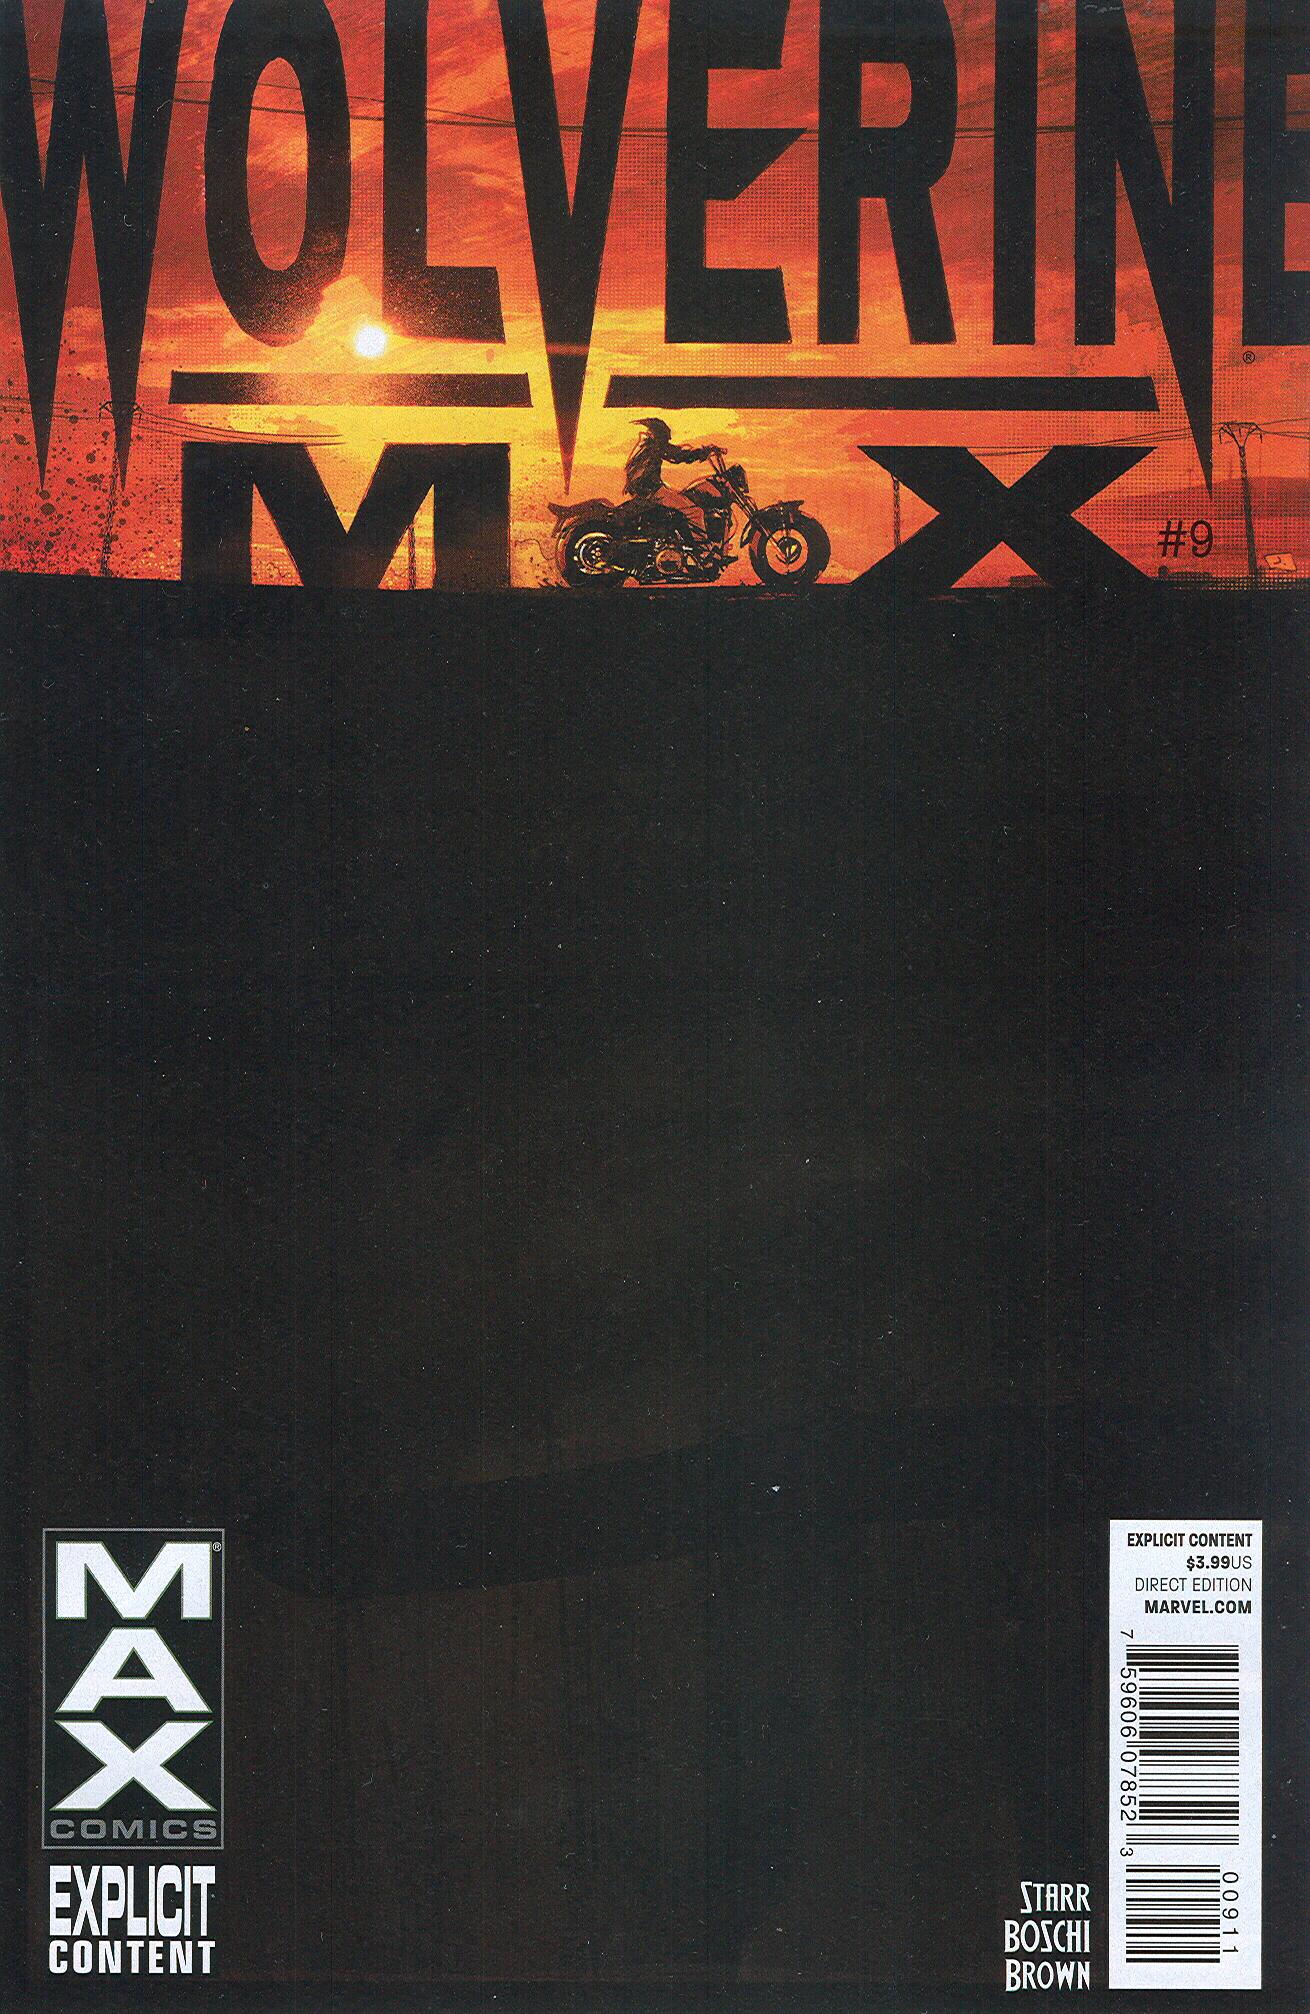 Wolverine: MAX Vol. 1 #9